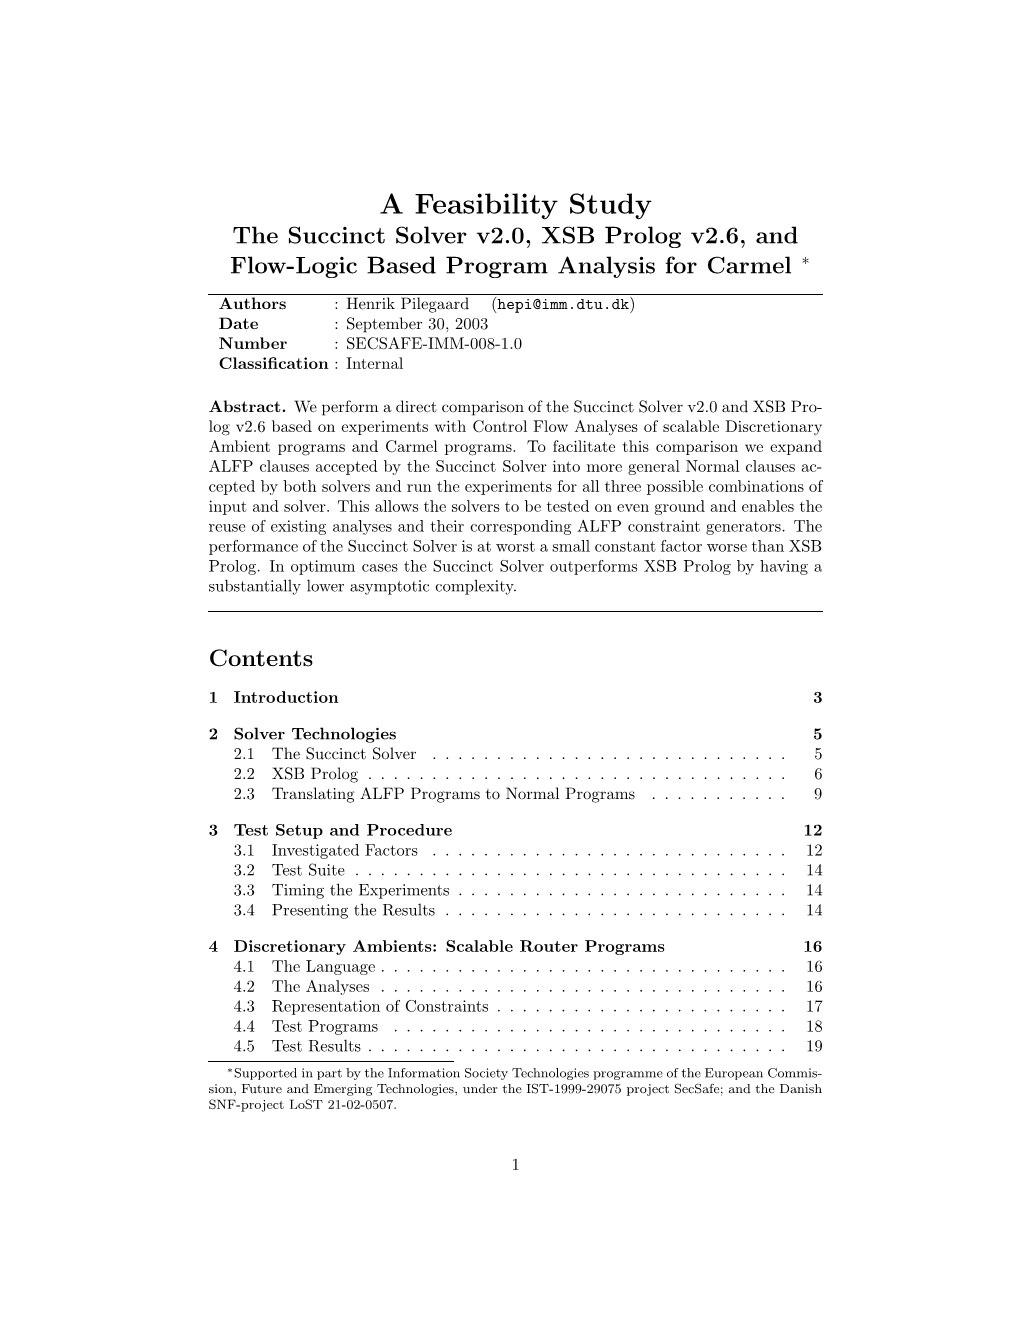 A Feasibility Study the Succinct Solver V2.0, XSB Prolog V2.6, and Flow-Logic Based Program Analysis for Carmel ∗